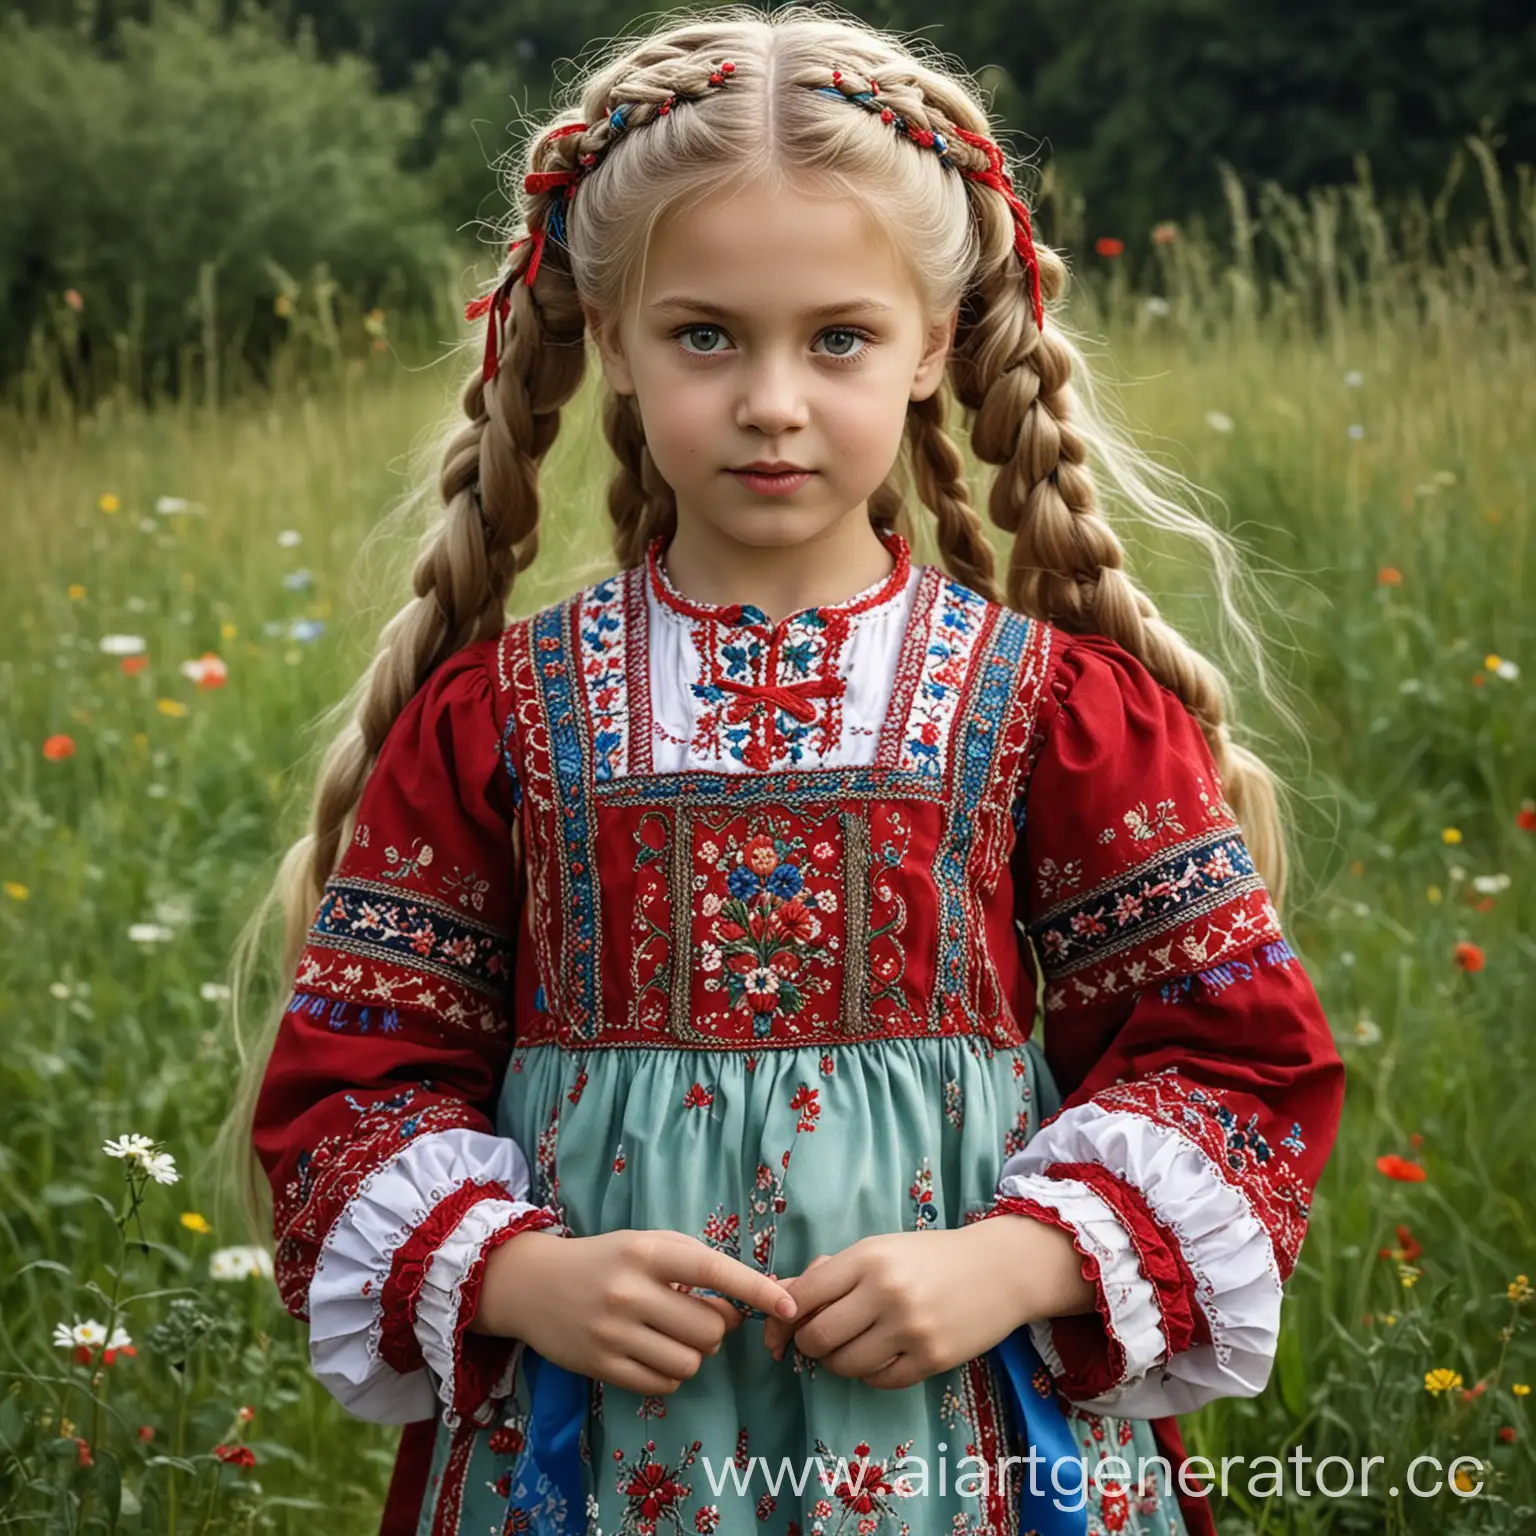 Slavic-Girl-with-Handmade-Doll-on-Meadow